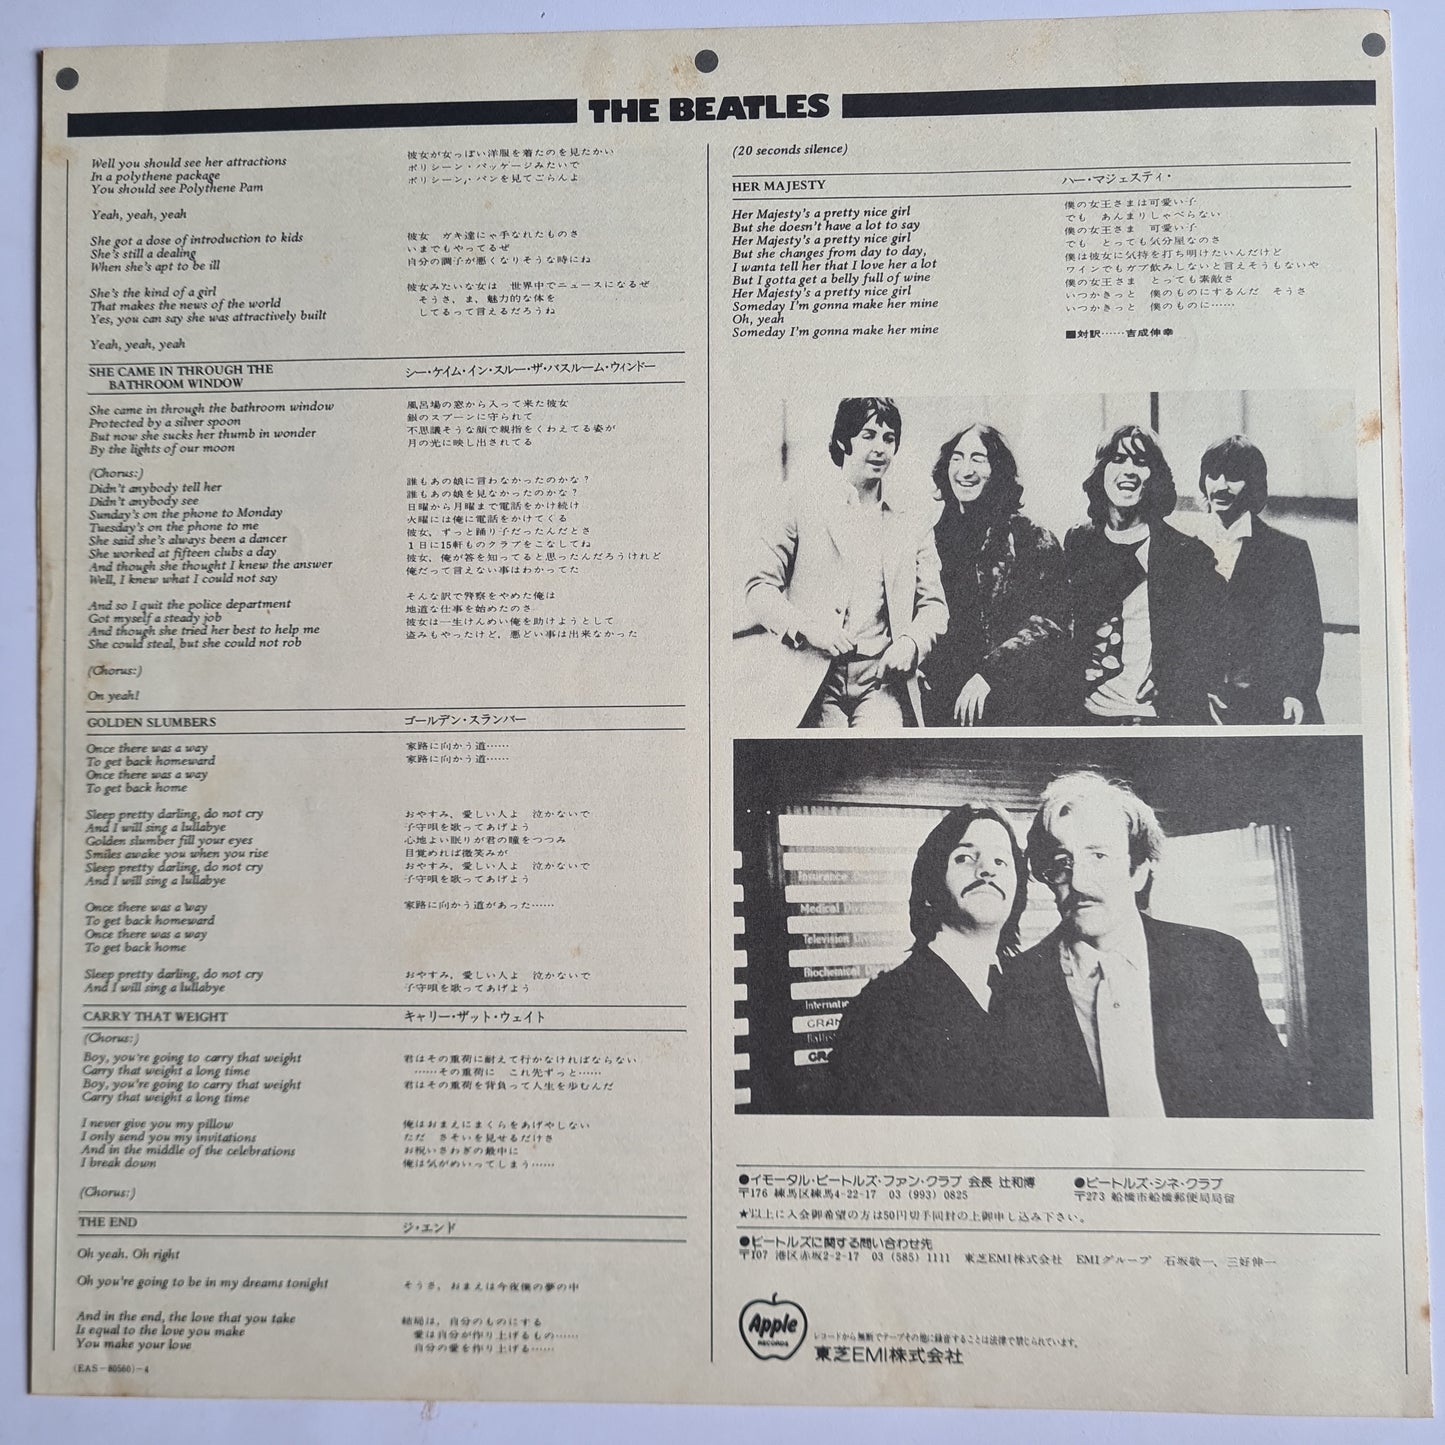 The Beatles – Abbey Road - 1969 (1976 Japanese Pressing) - Vinyl Record